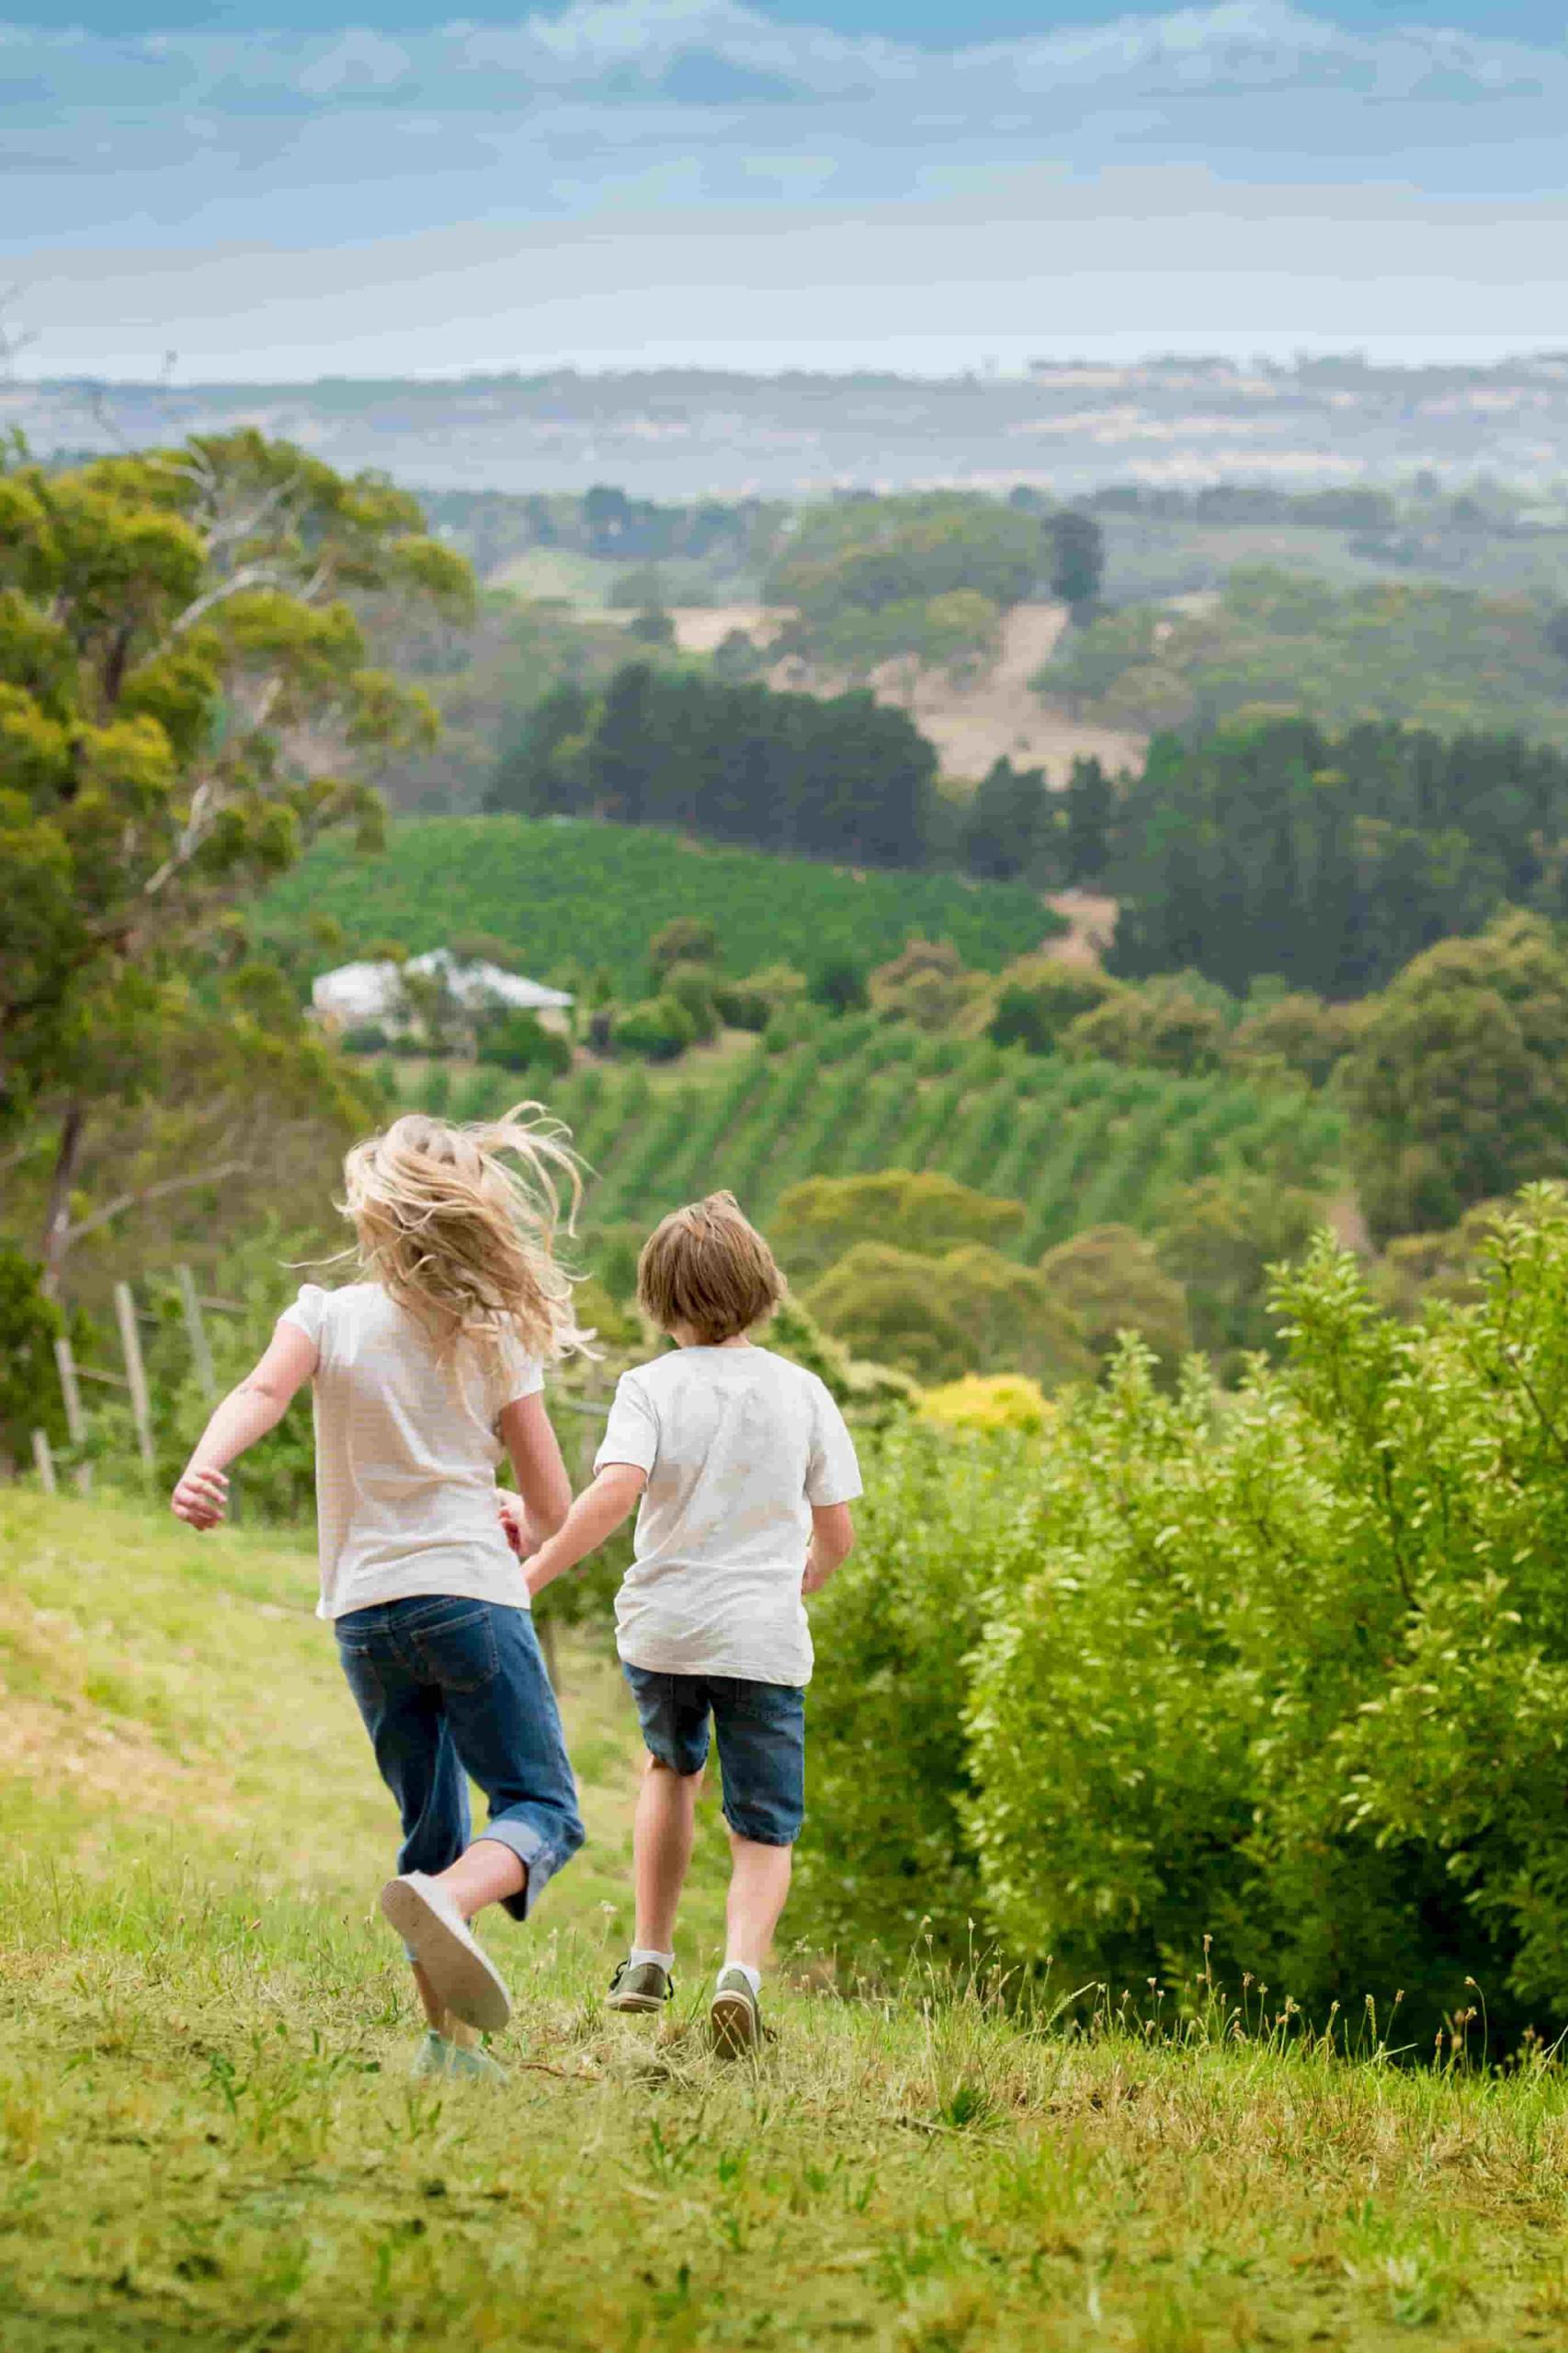 Children running through Adelaide Hills with a vineyard in the background